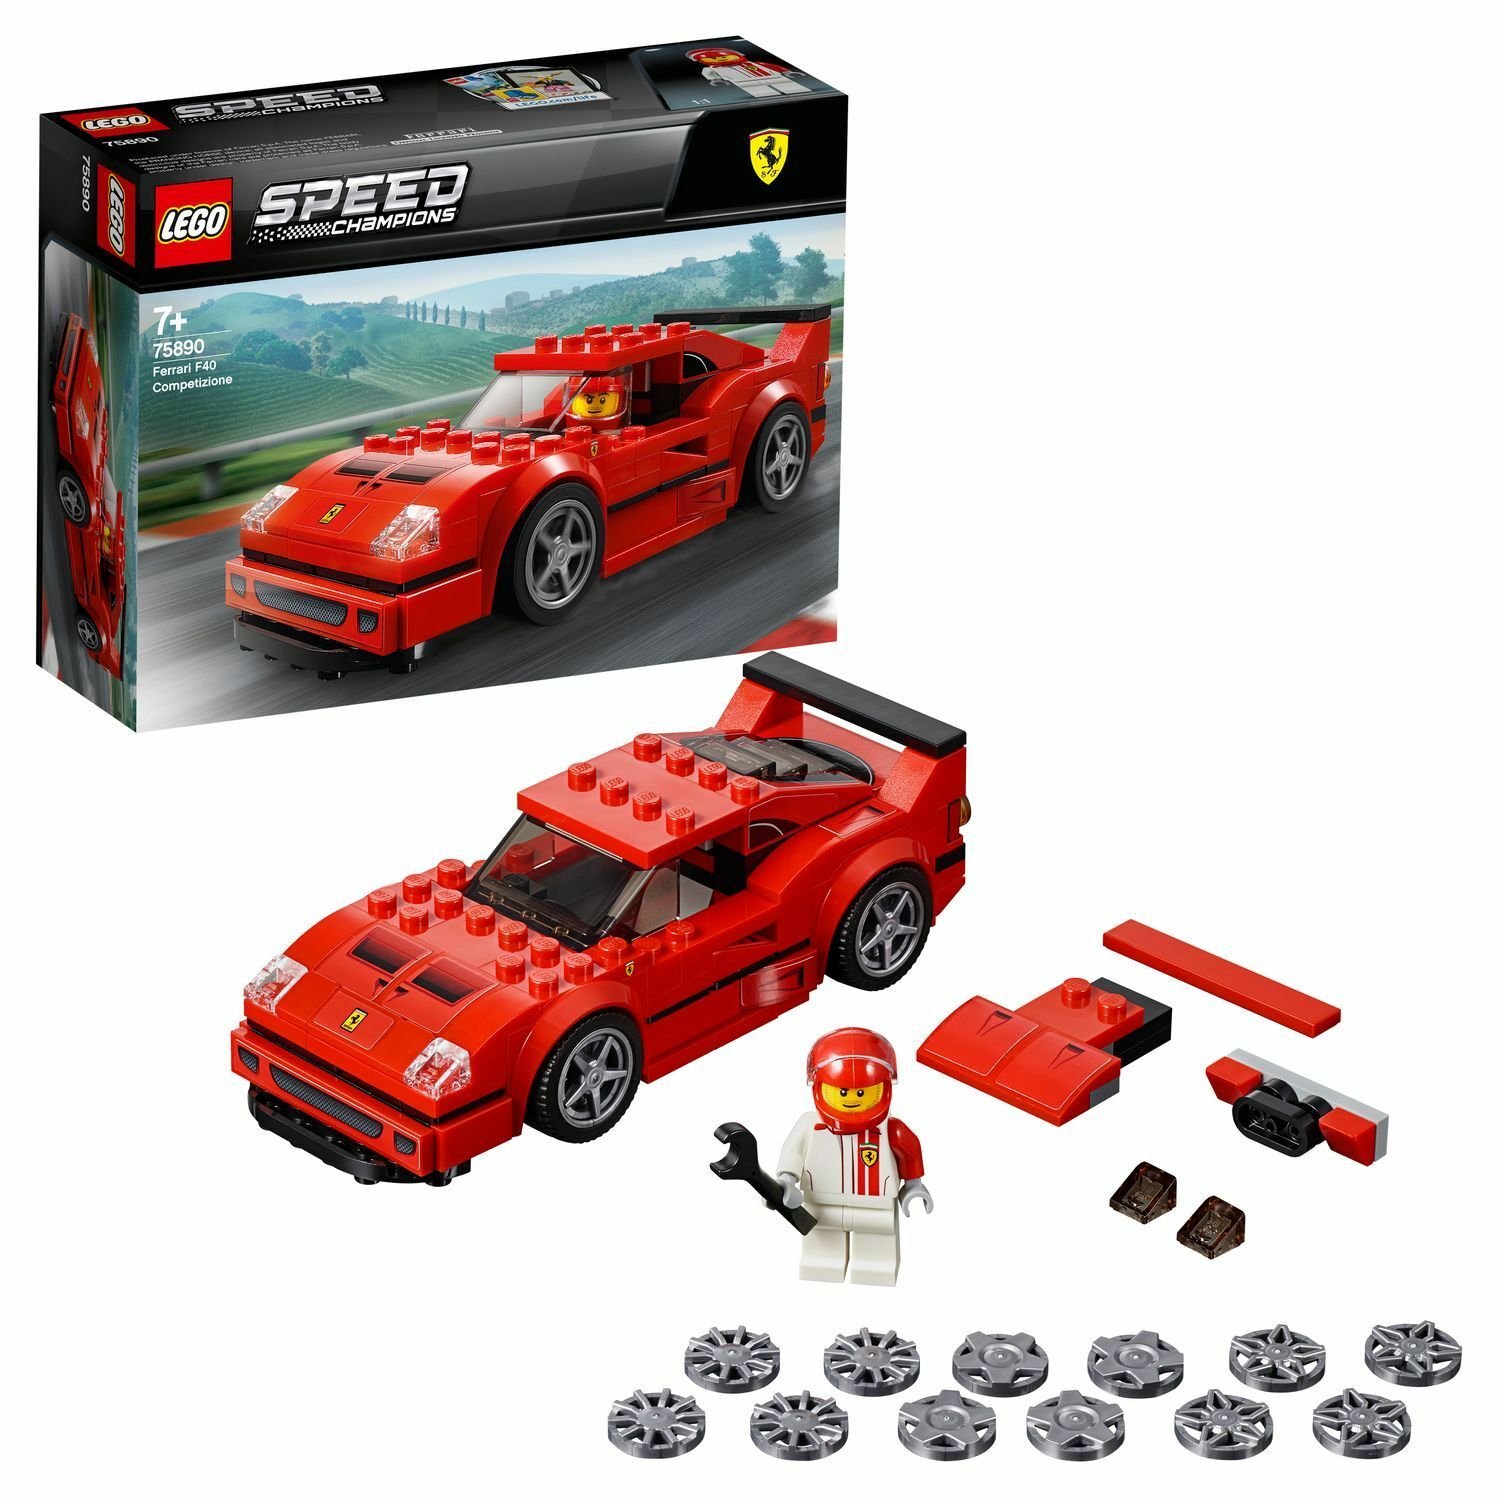 Конструктор LEGO Speed Champions Автомобиль Ferrari F40 Competizione, 75890 конструктор lego polybag speed champions 30657 mclaren solus gt 95 дет